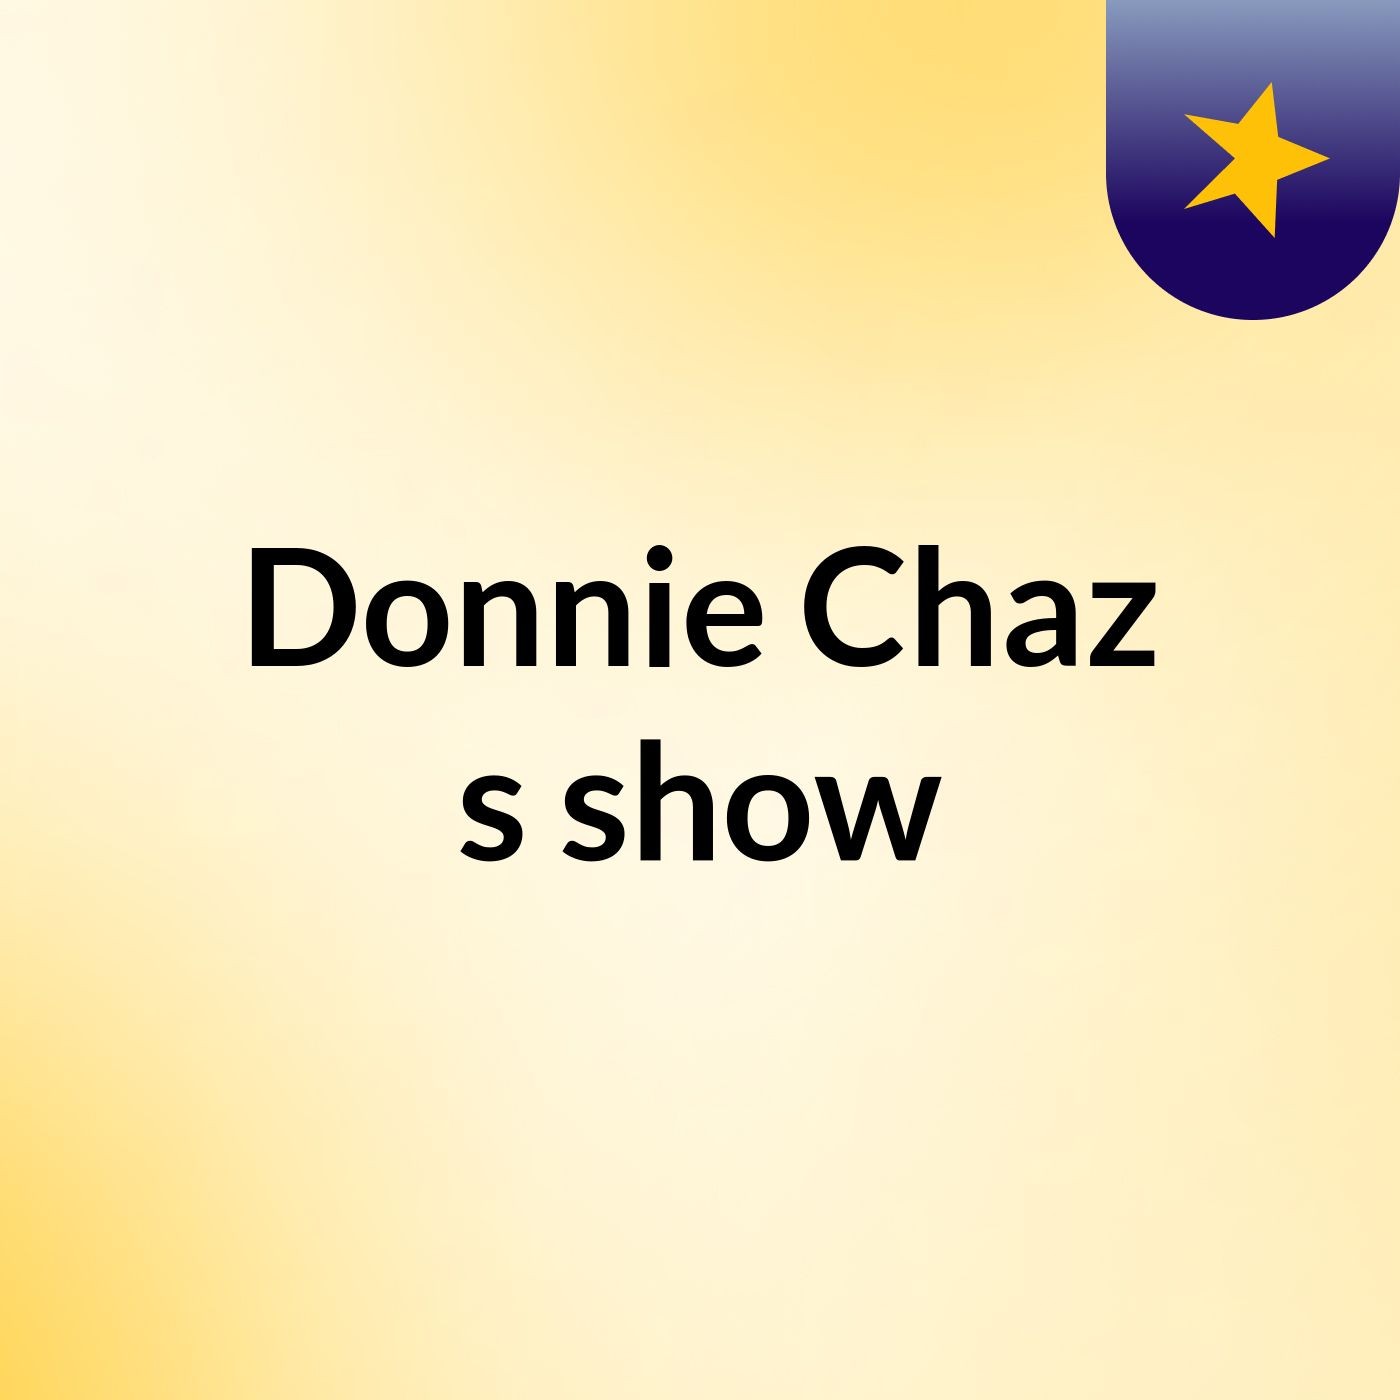 Episode 4 - Donnie Chaz's show